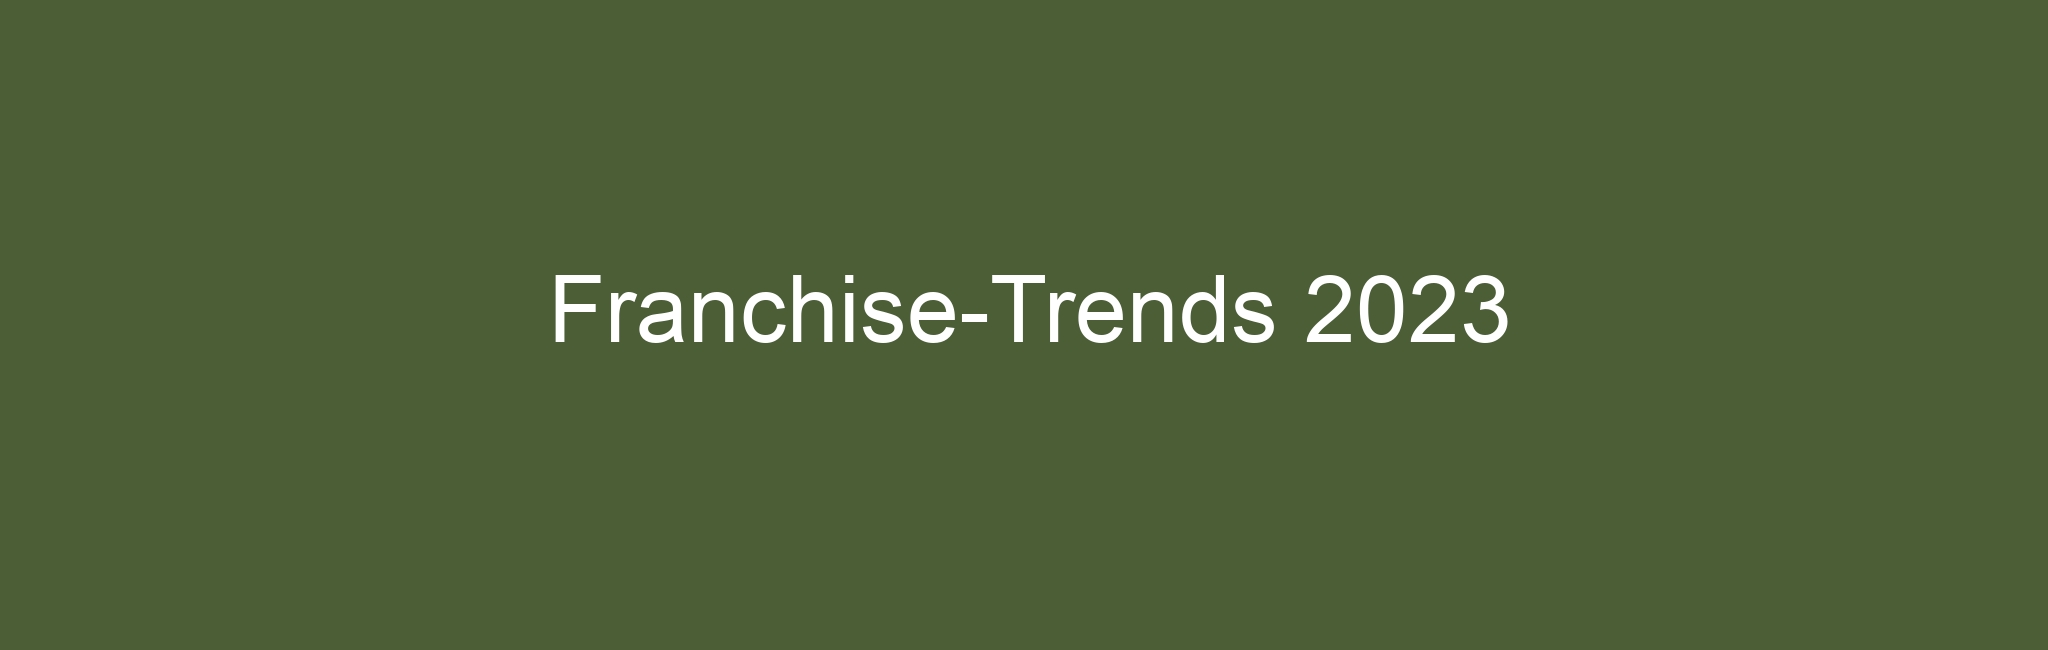 Franchise-Trends 2023